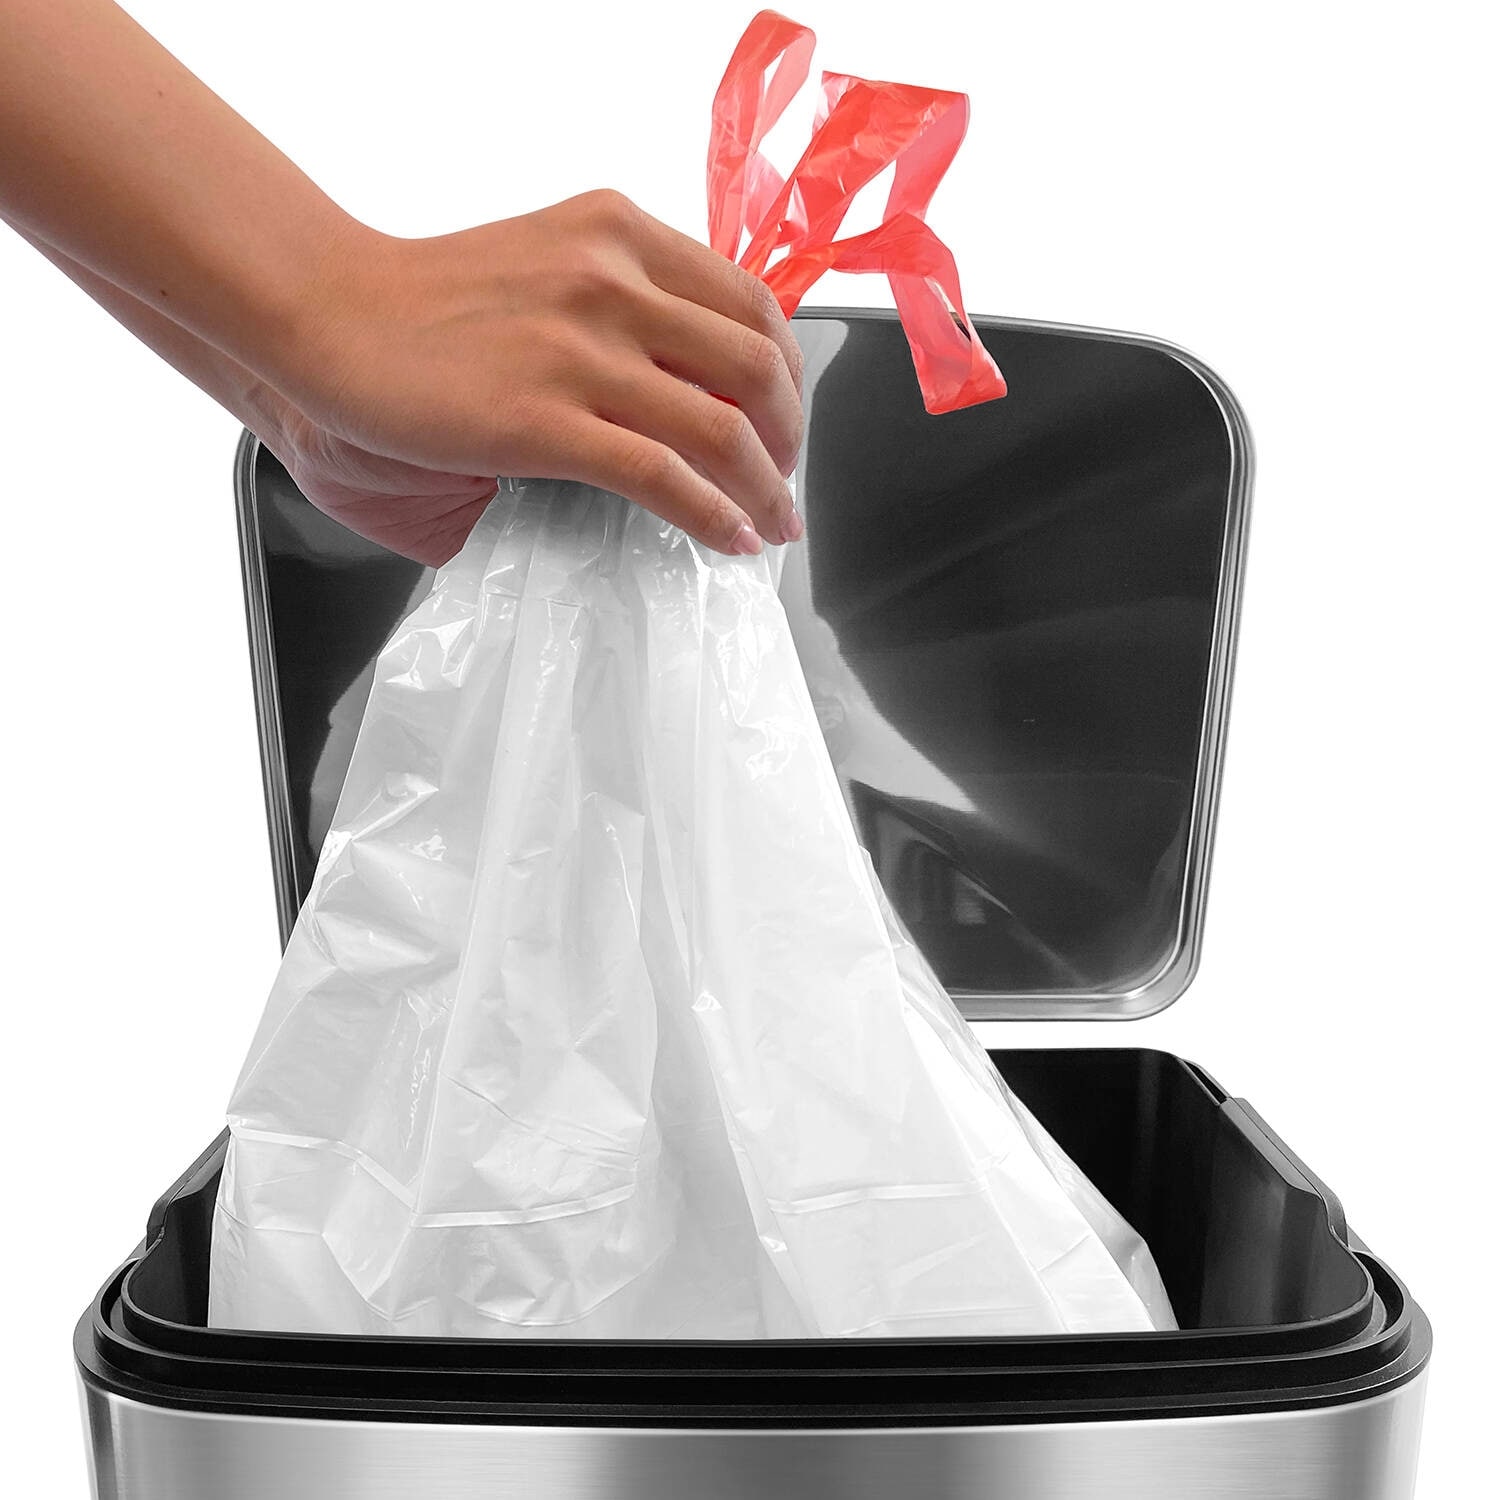 TB002 Drawstring Trash Bags, 40 Liter / 10.5 Gallon, 30 Count, Size: White - Step